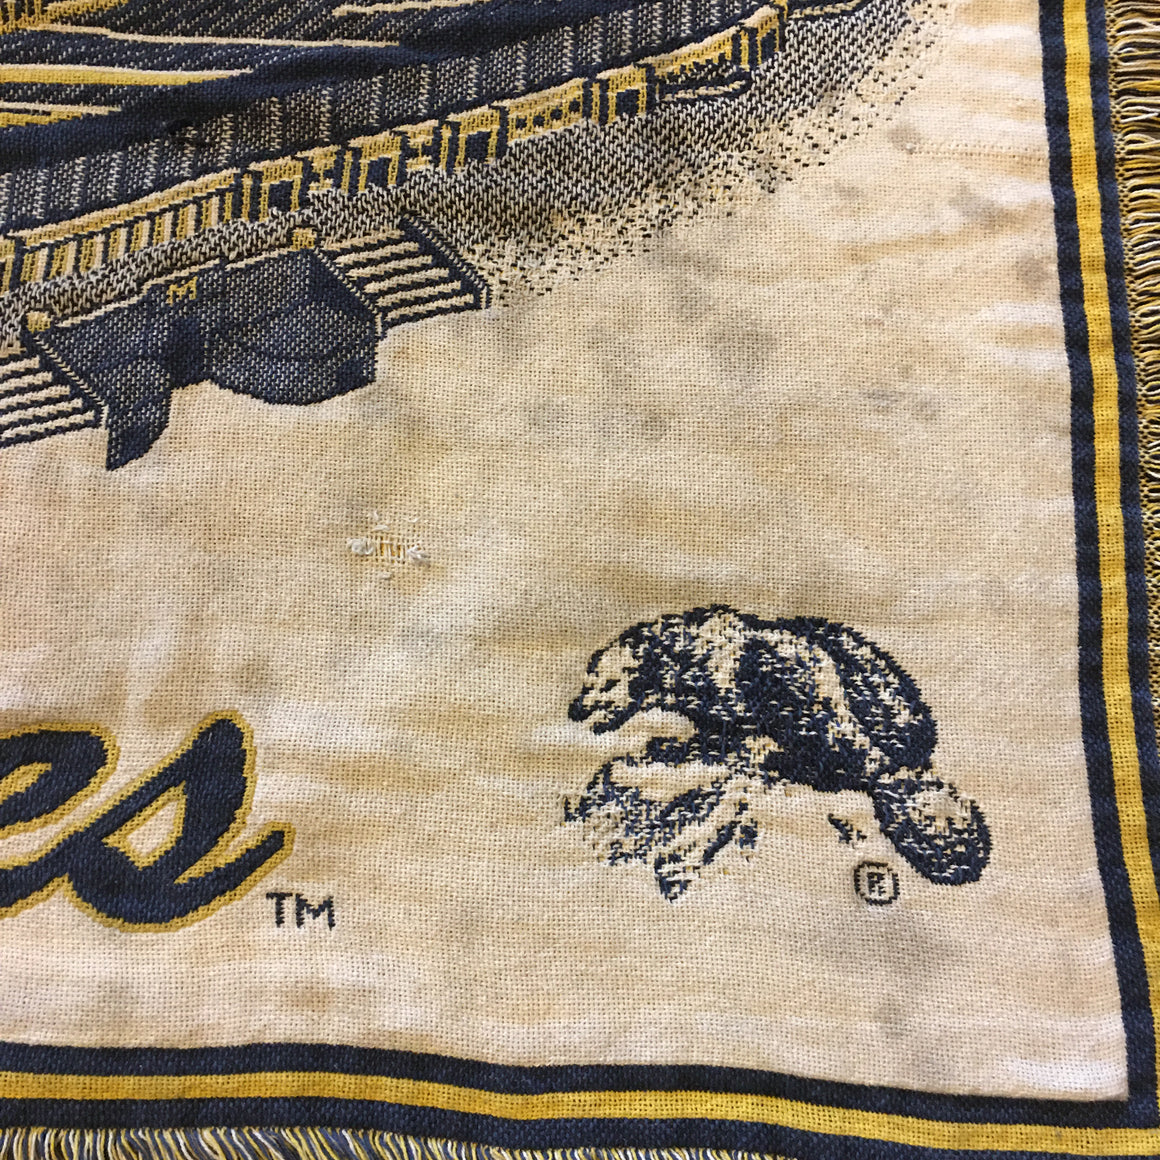 Michigan Wolverines Stadium blanket